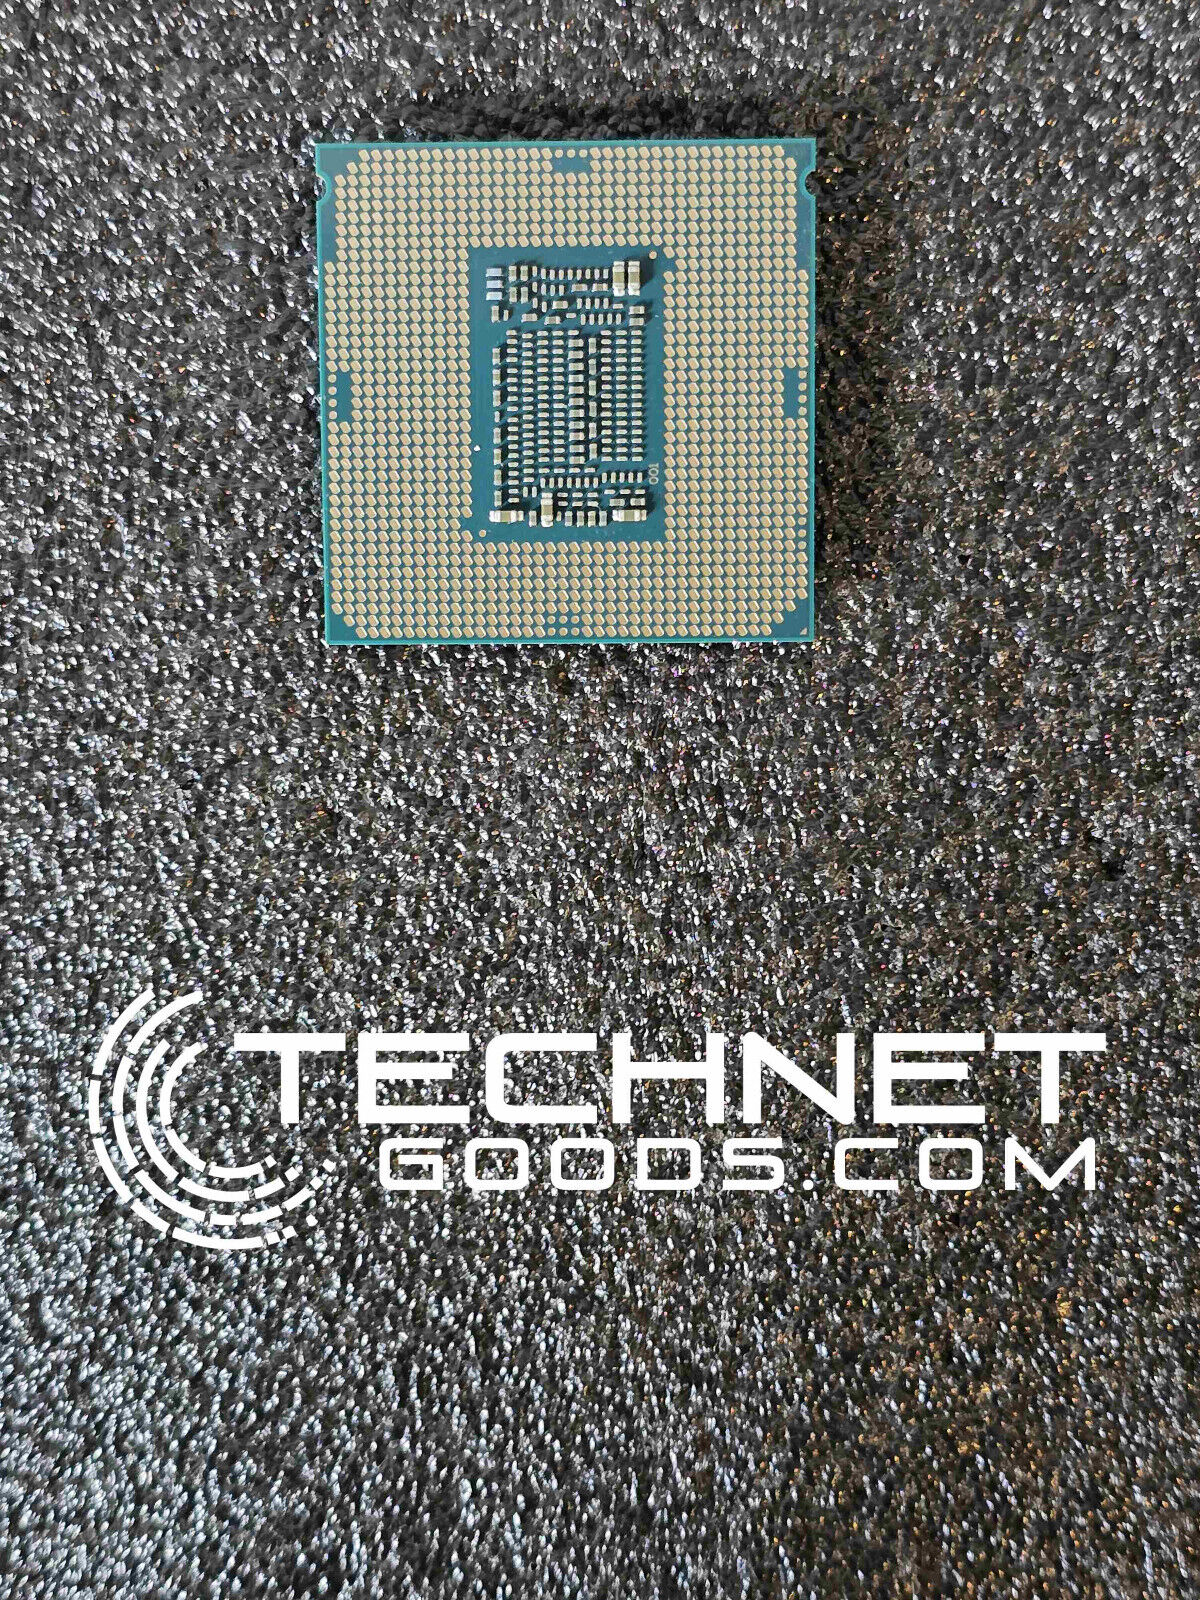 Intel Core i5-8500 3.0 GHz (4.1GHz TURBO) LGA 1151 Processor (SR3XE) - TESTED